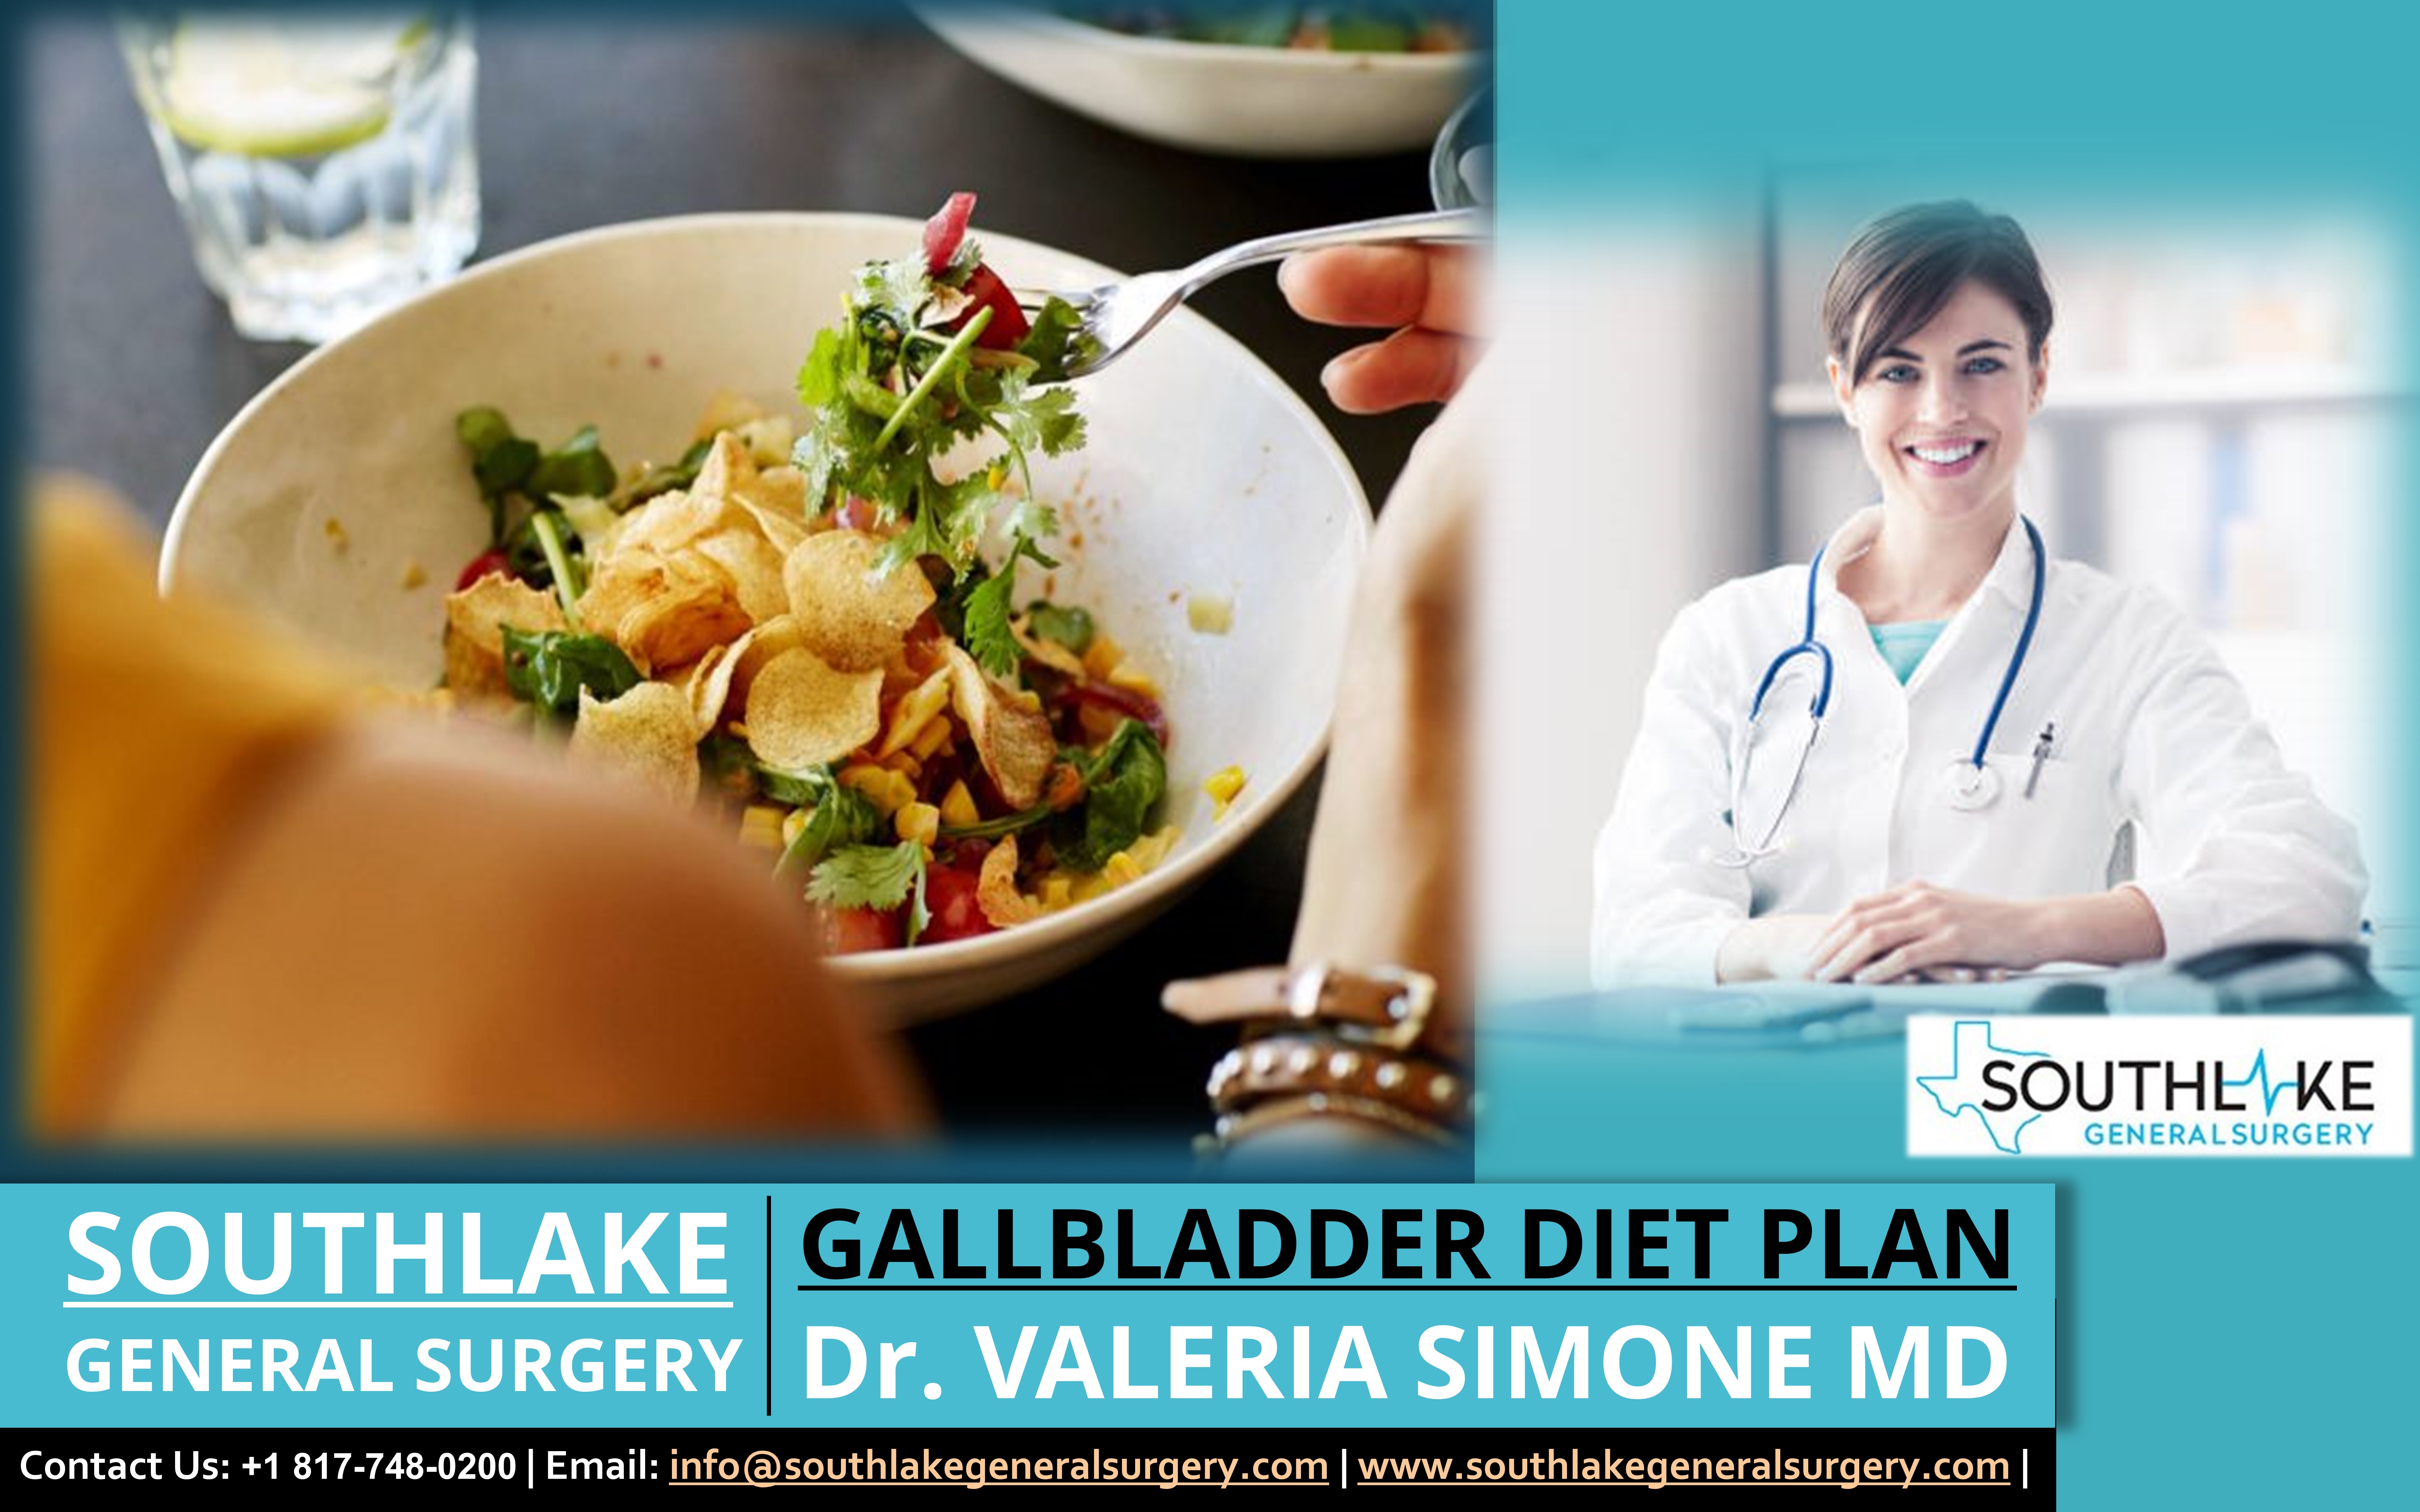 Gallbladder Diet Plan – Dr. Valeria Simone MD